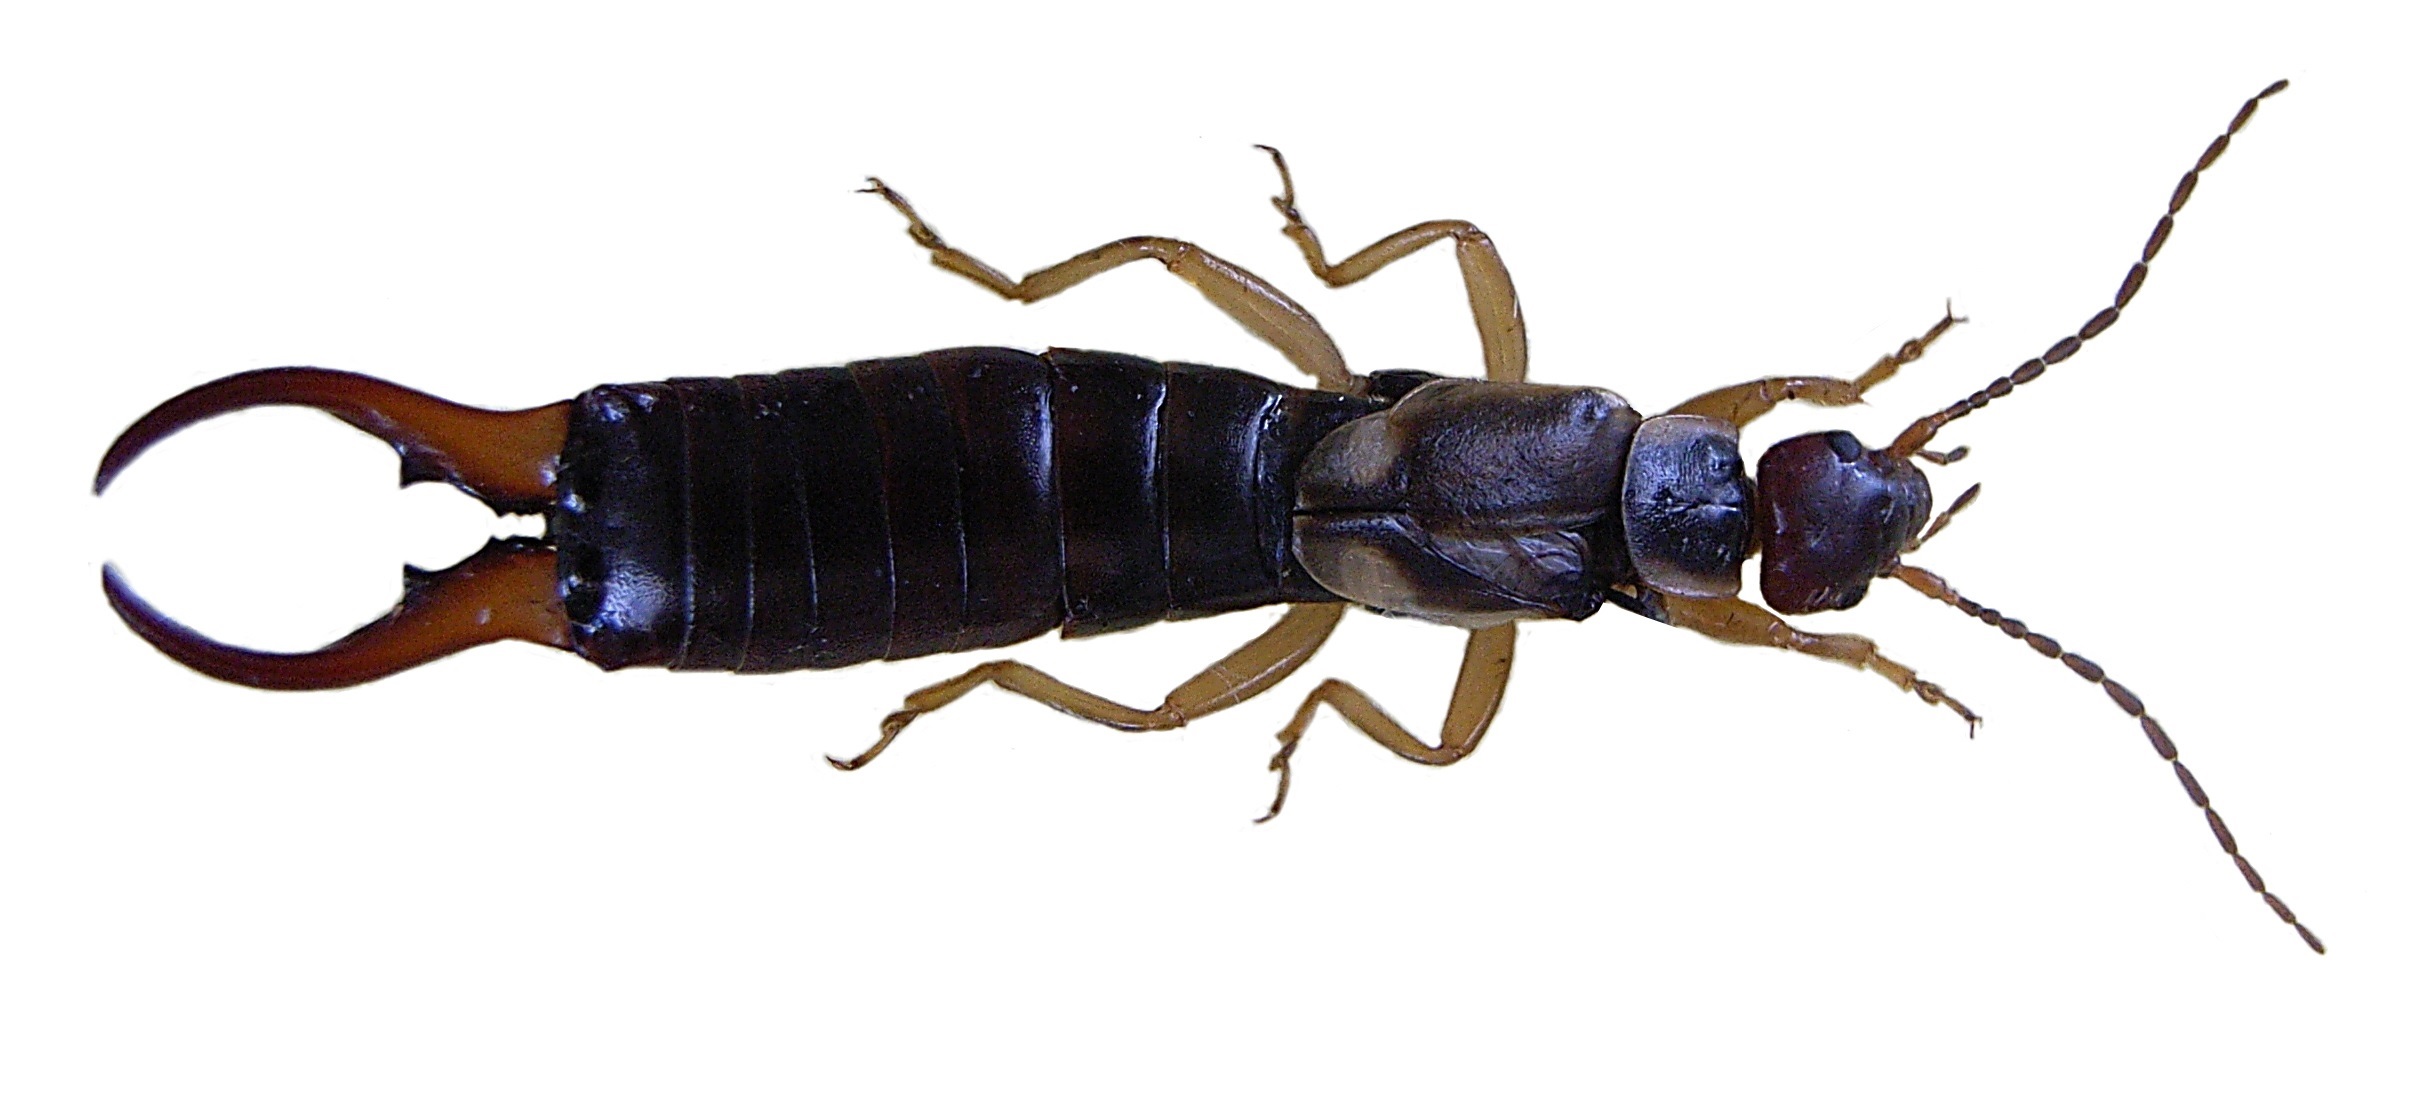 Do Earwigs (aka Pincer Bugs) Really Pinch?